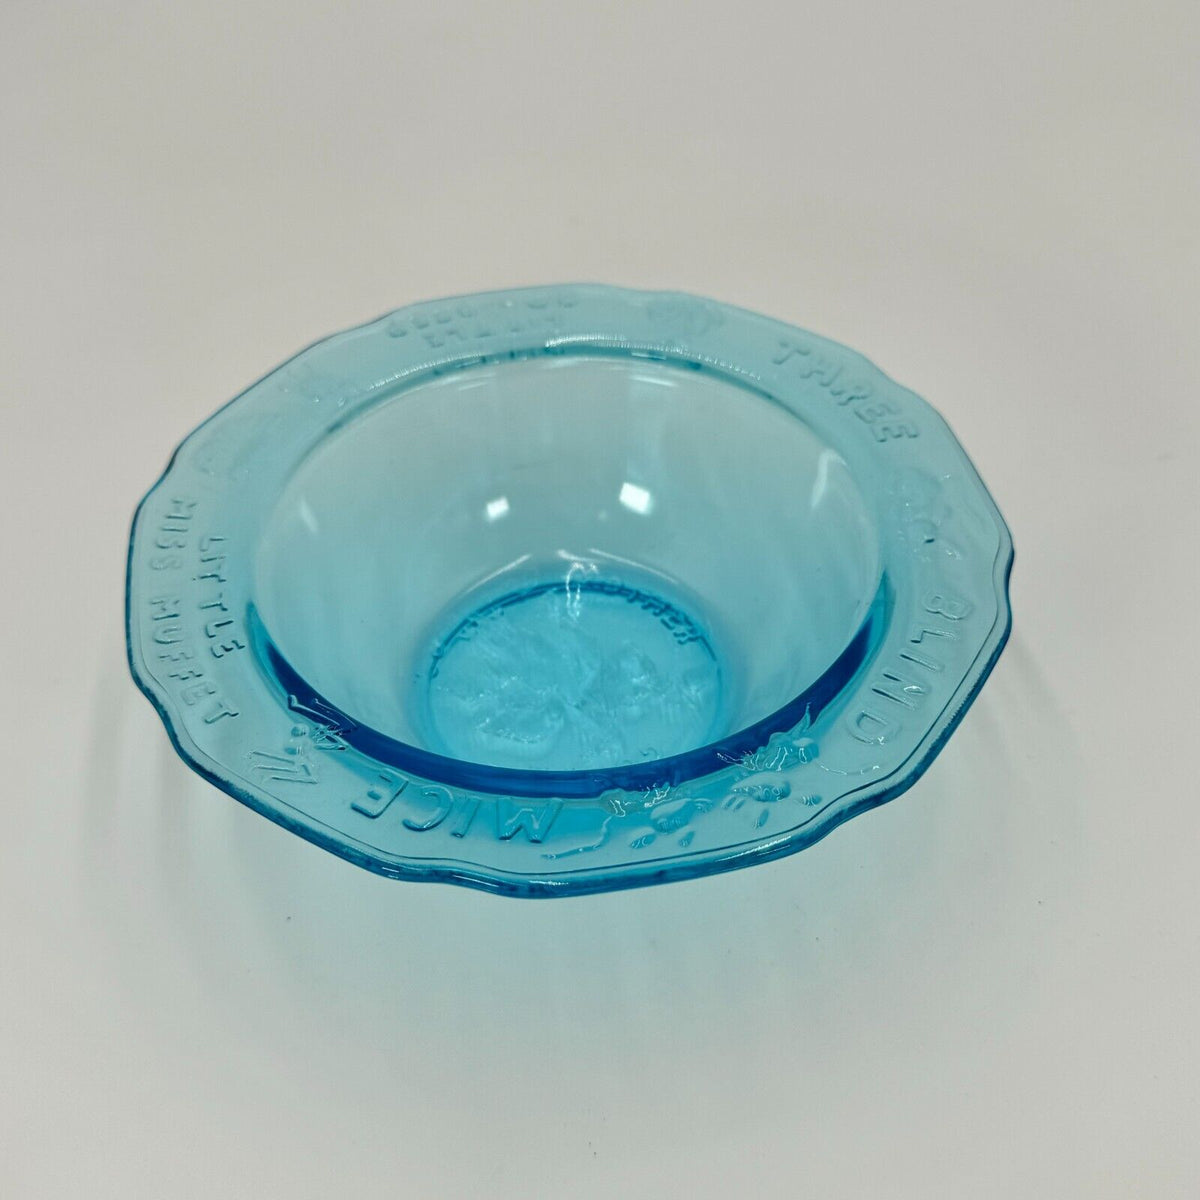 Tiara by RS - BLUE Glass NURSERY RHYME BOWL - Mother Goose 3 Blind Mice Vintage